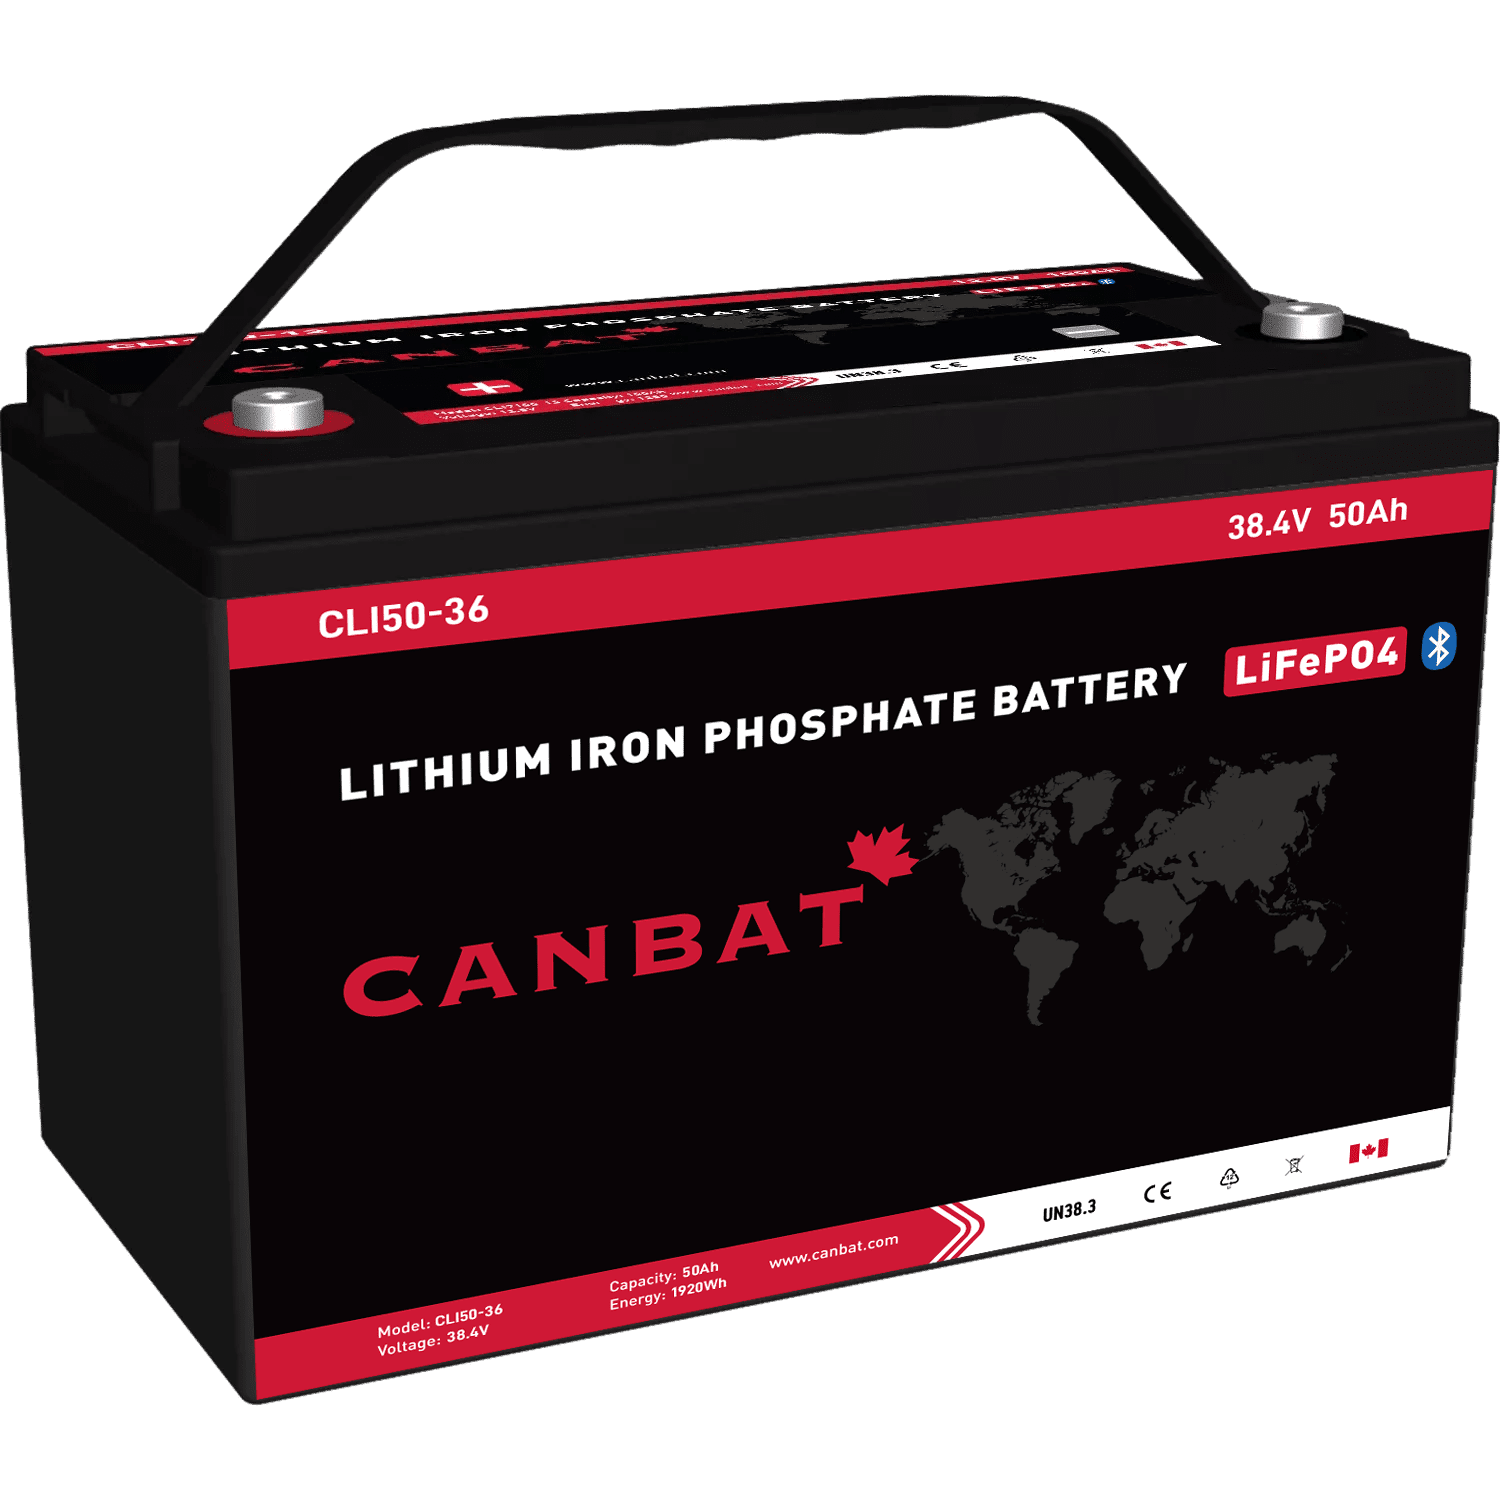 36V 50Ah Lithium Battery Canada - LiFePO4 - Free Shipping!